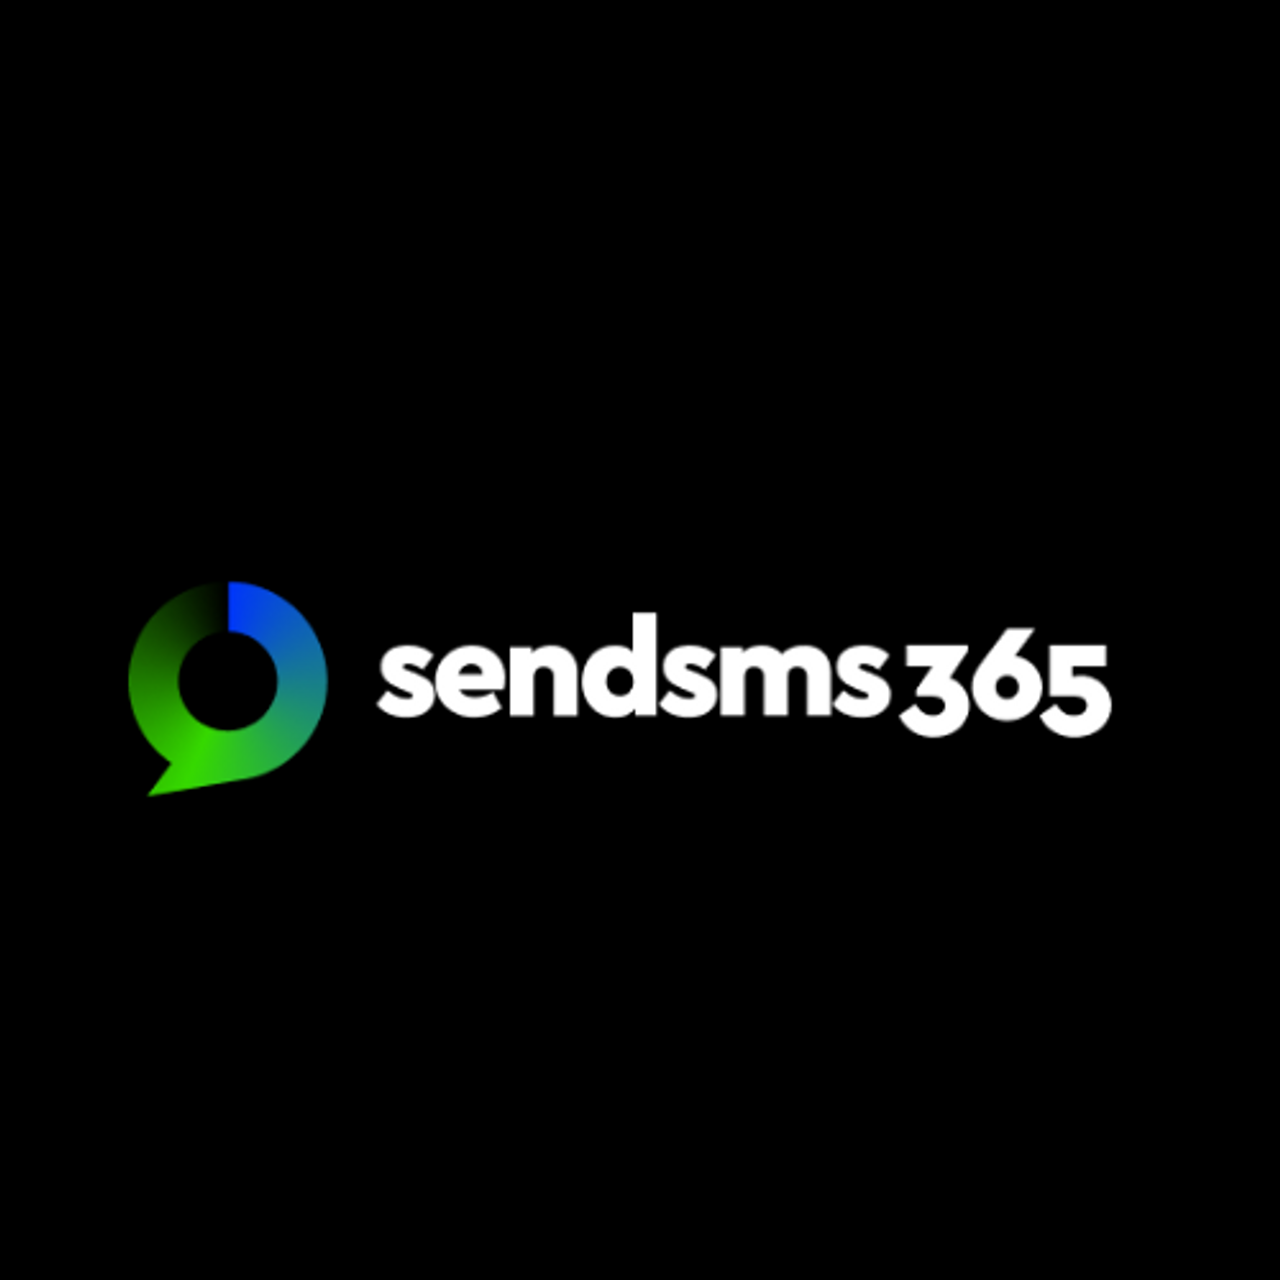 sendsms365